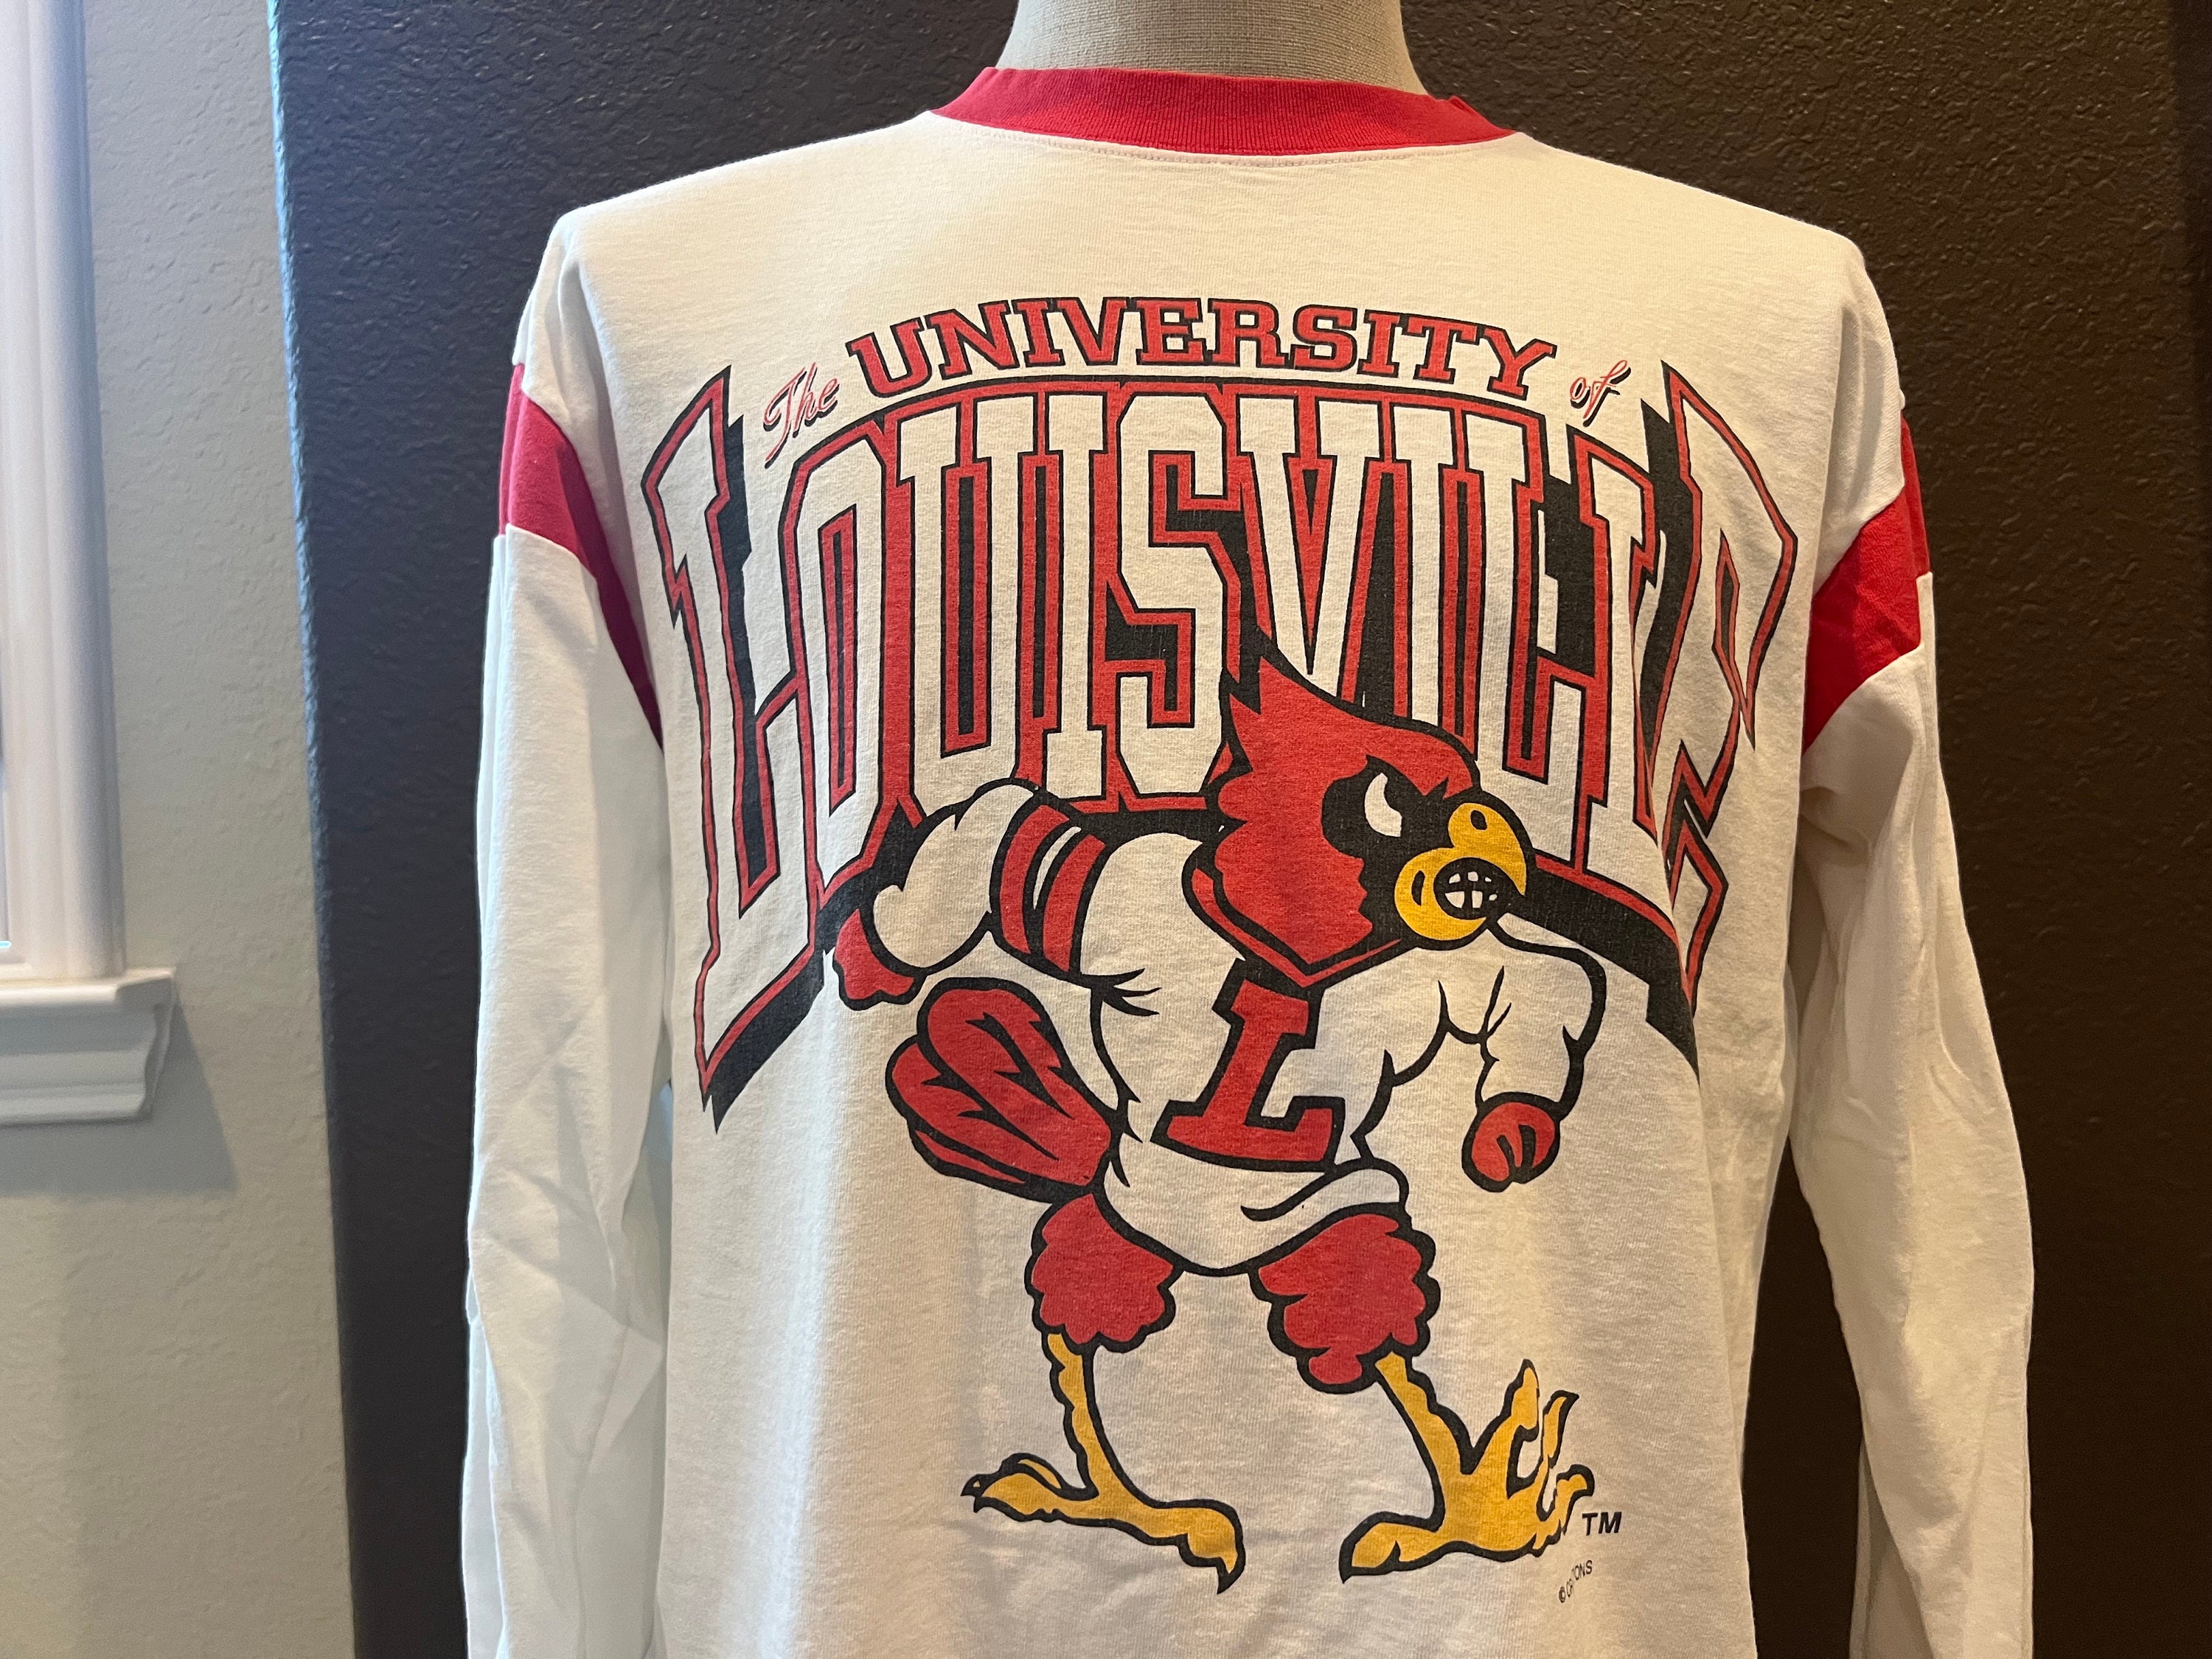 Vintage 90's University of Louisville Cardinals White Long 